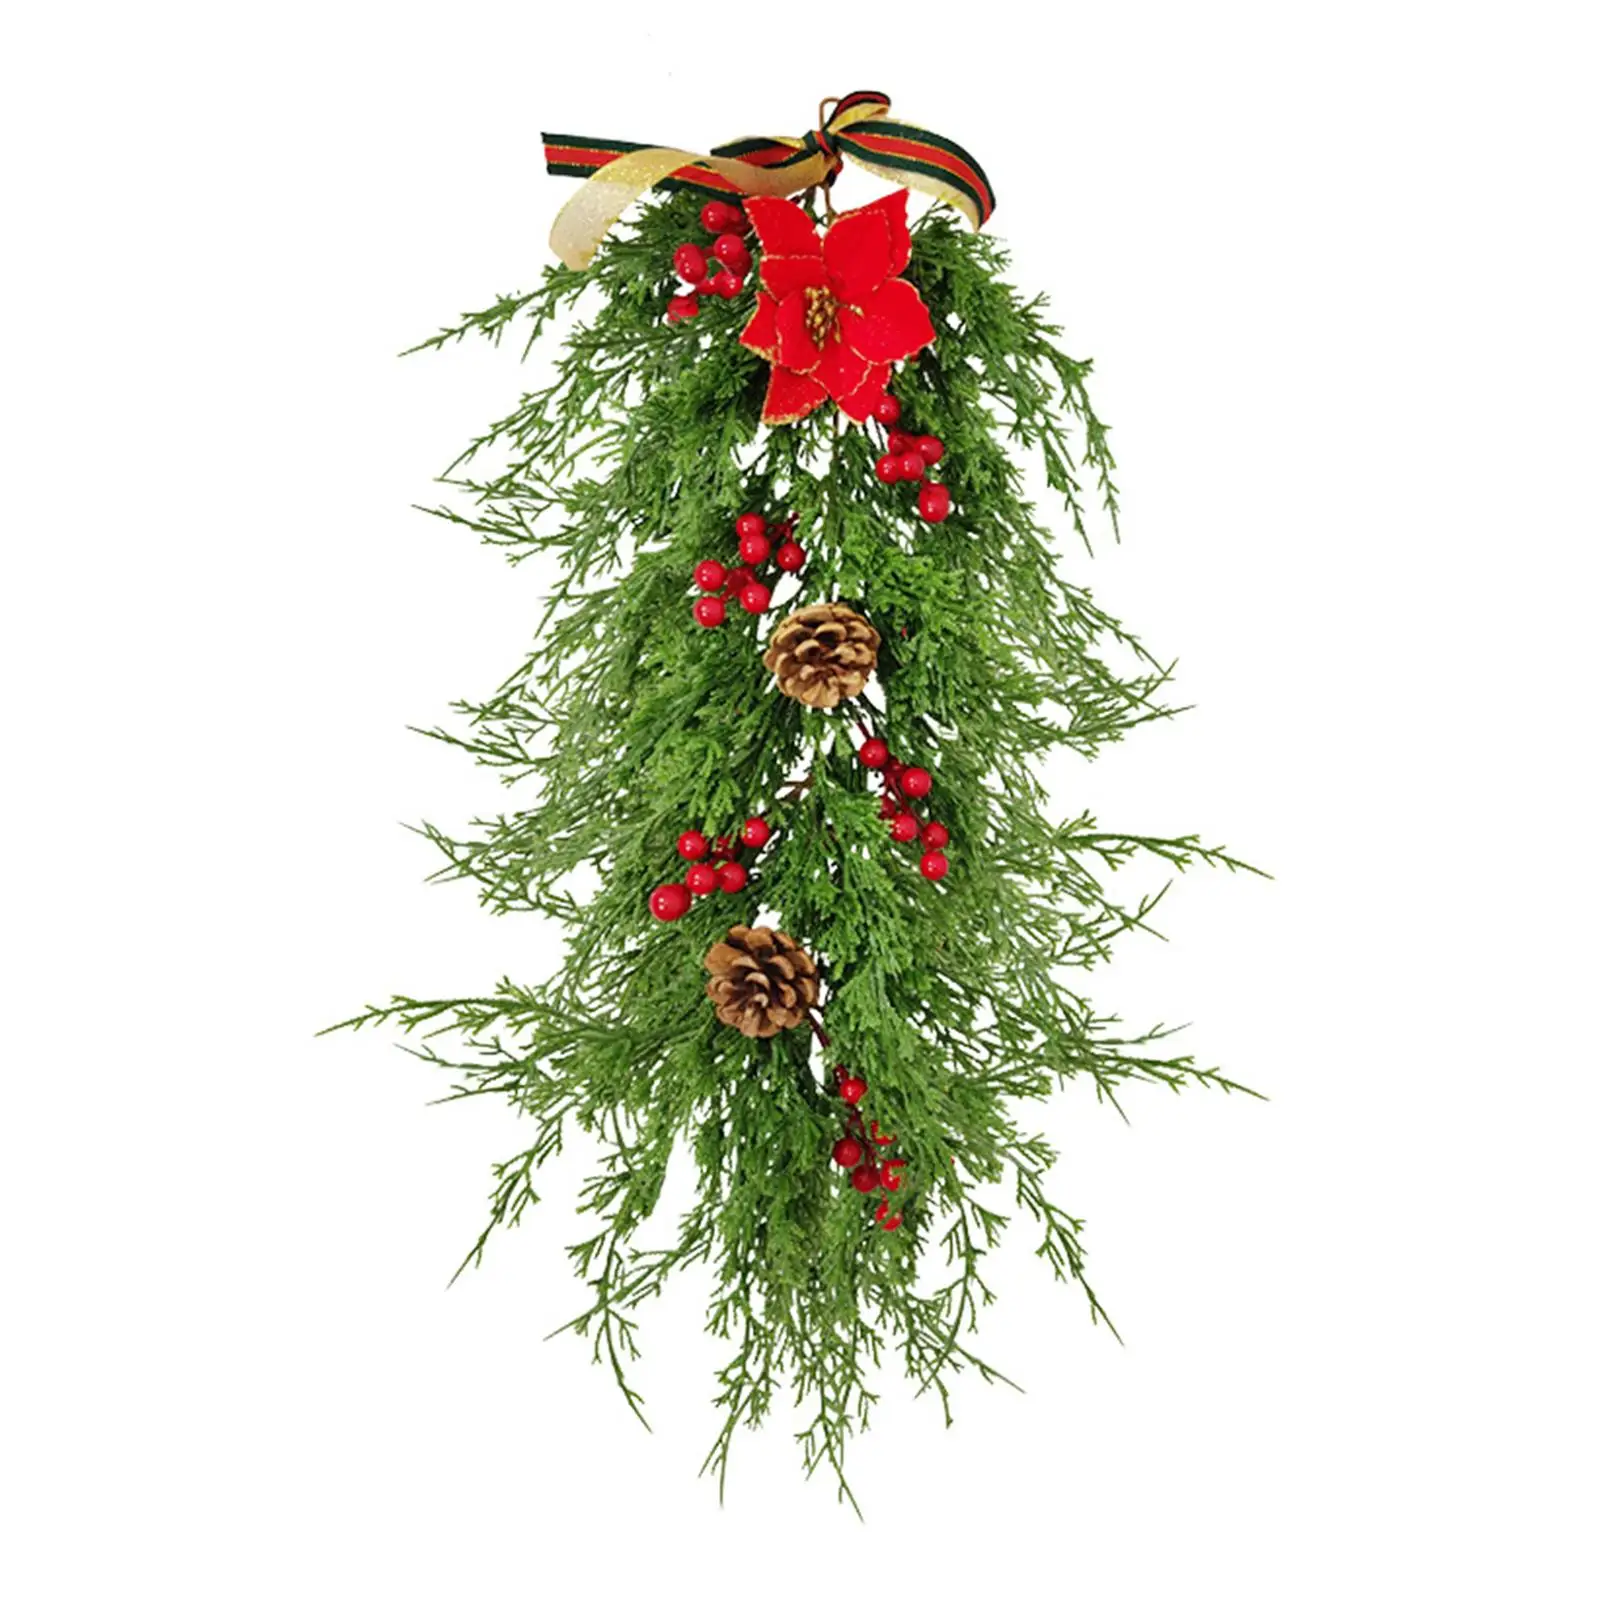 Decorative Christmas Teardrop Wreath Wall Door Hanging for Party Backdrop